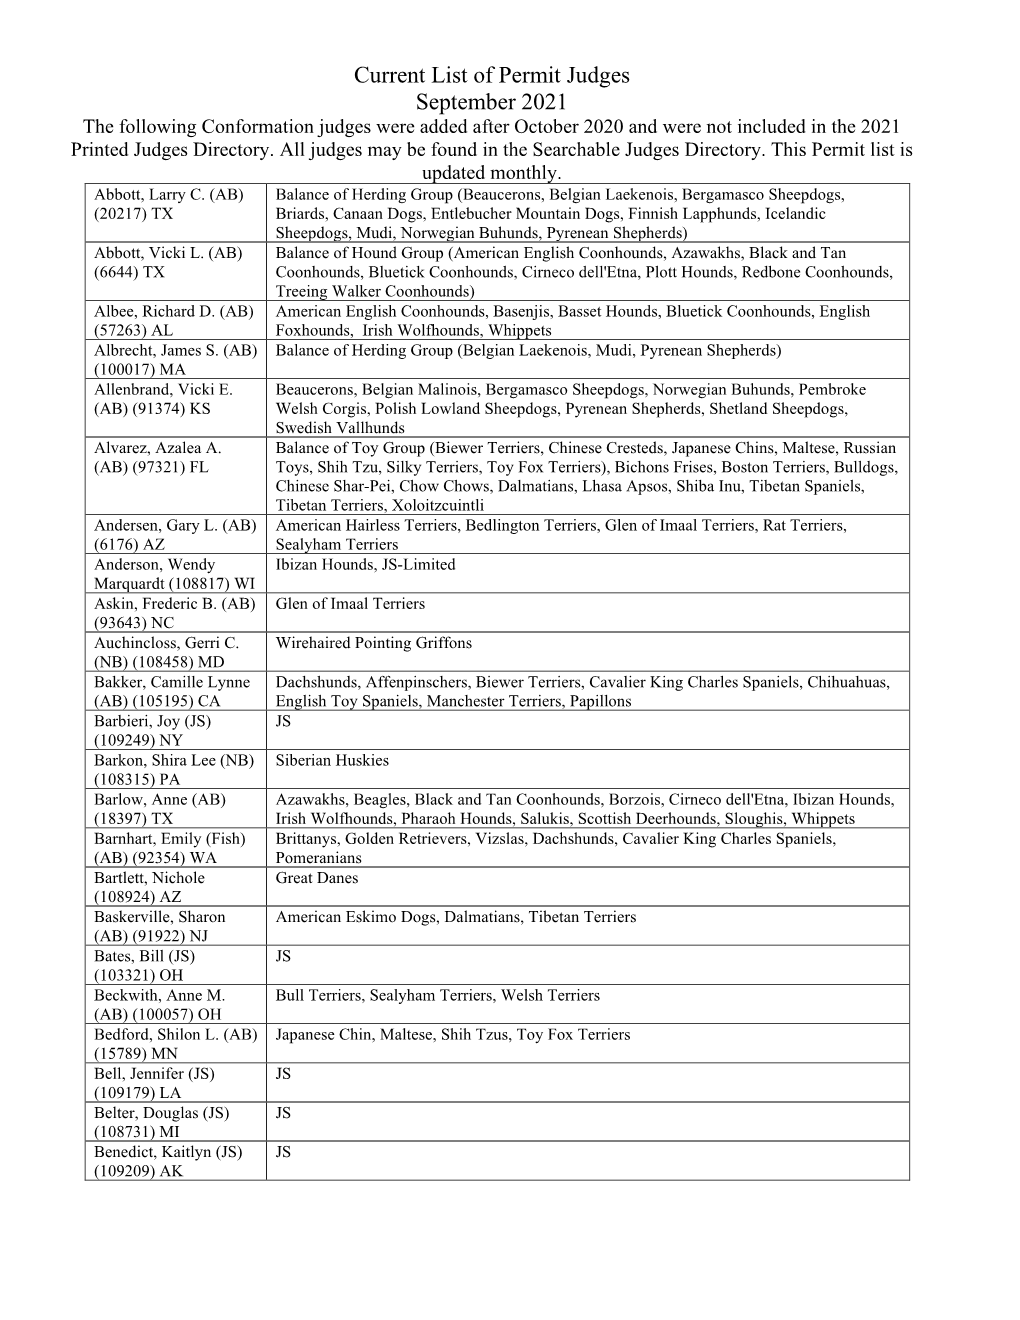 Current List of Permit Judges August 2021